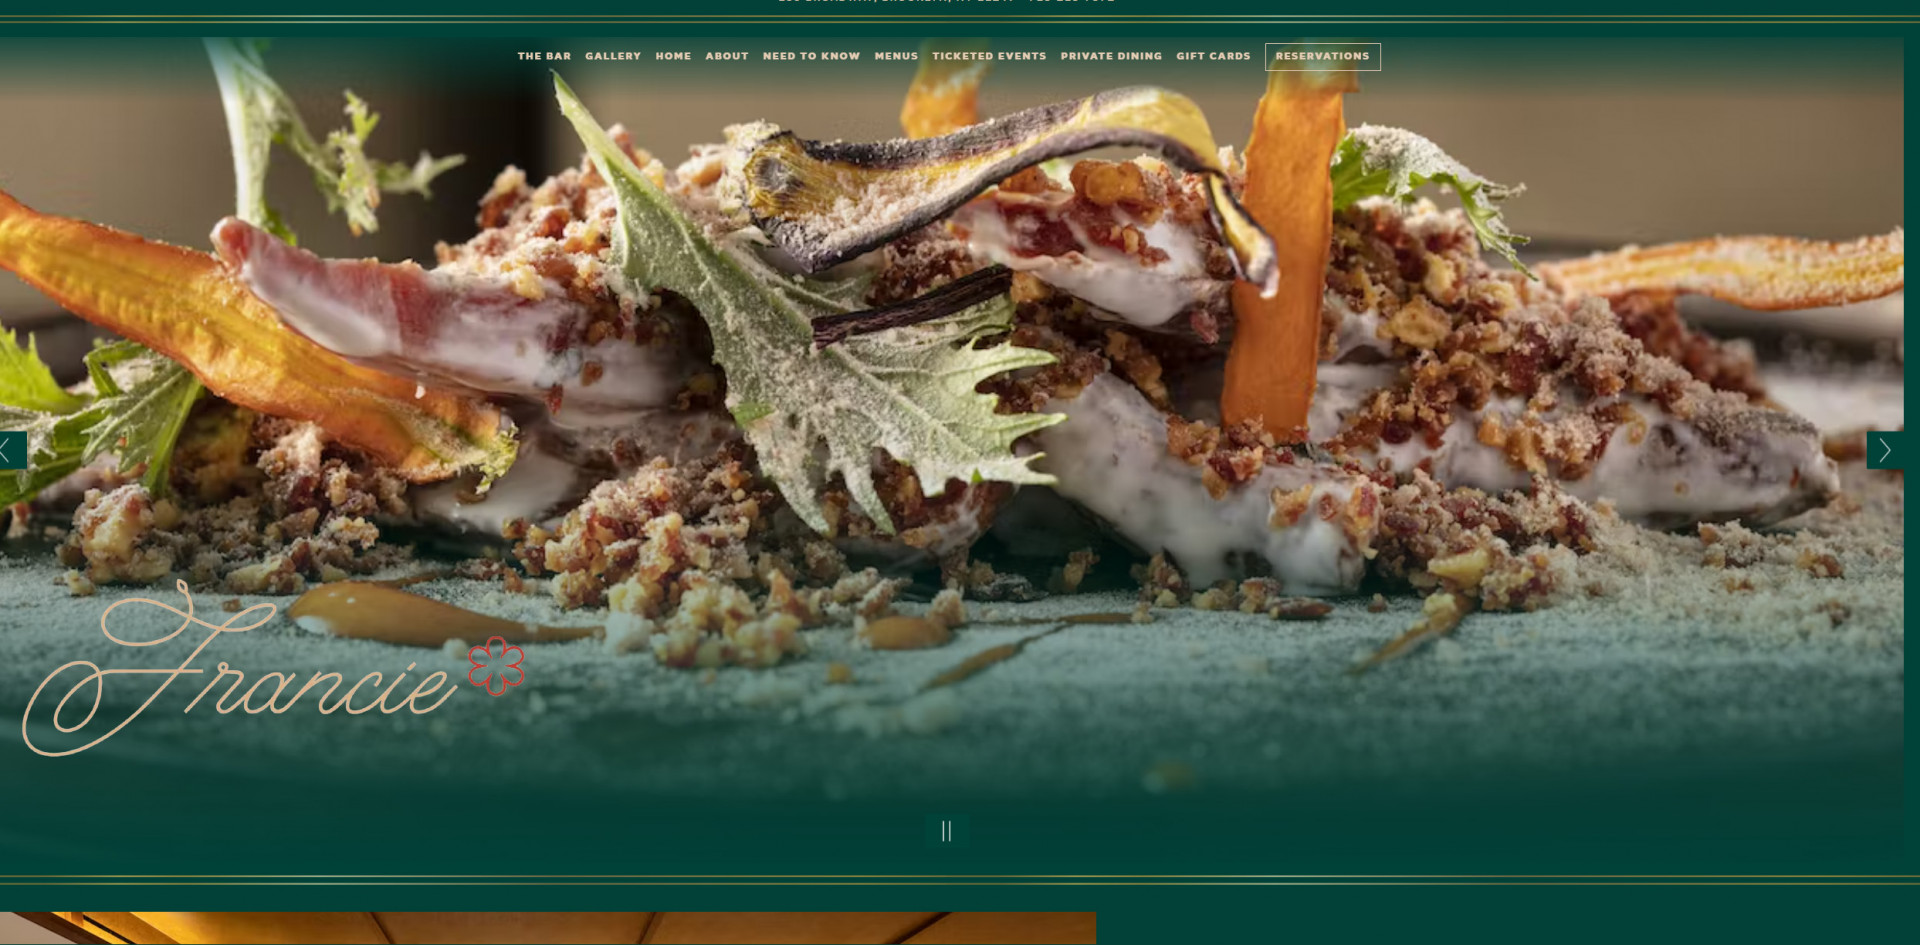 A restaurant website design for businesses that offer fine dining